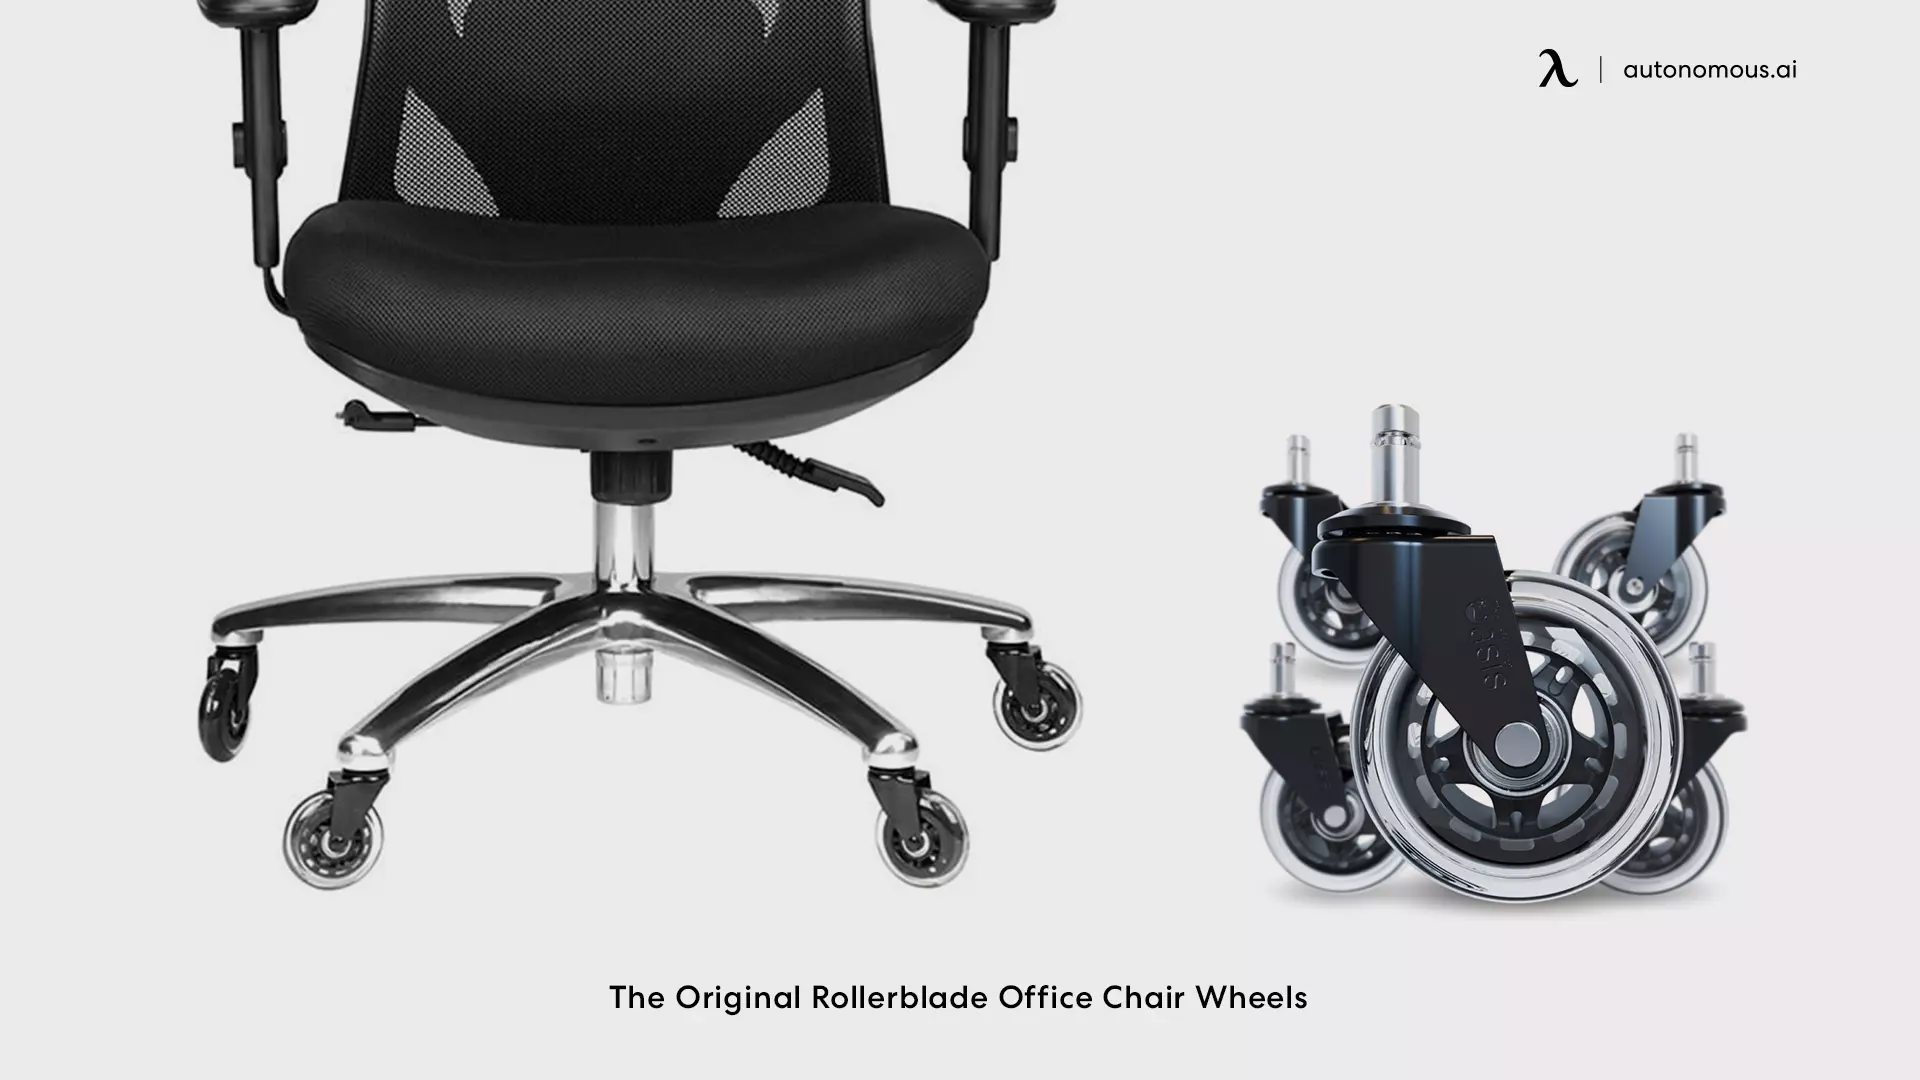 The Original Rollerblade Office Chair Wheels